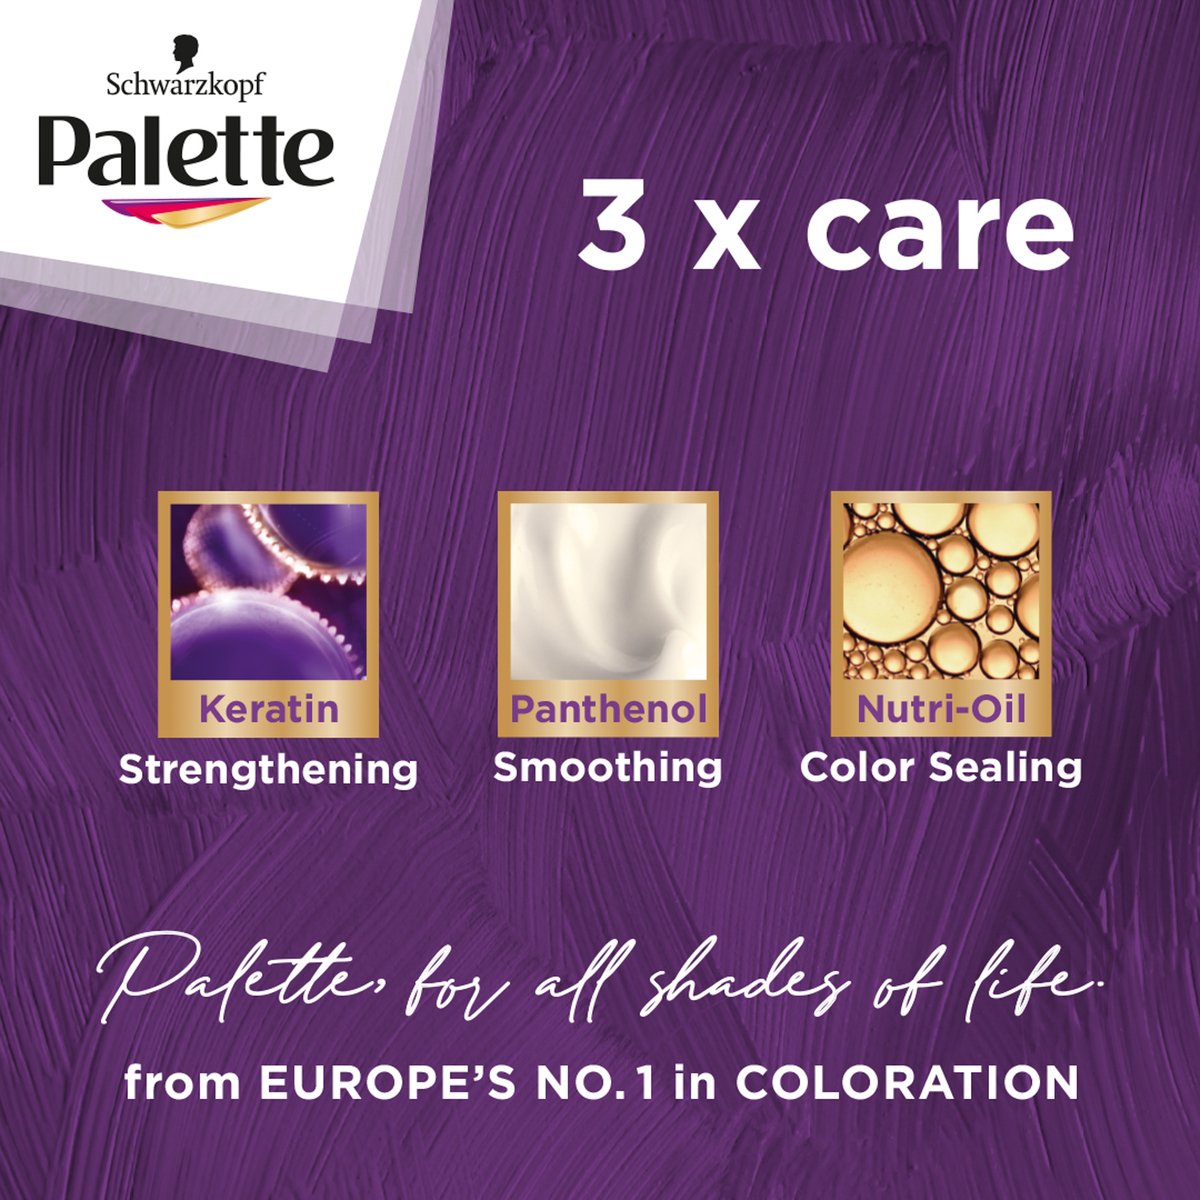 Palette Intensive Color Creme 7-1 Medium Ash Blonde 1 pkt